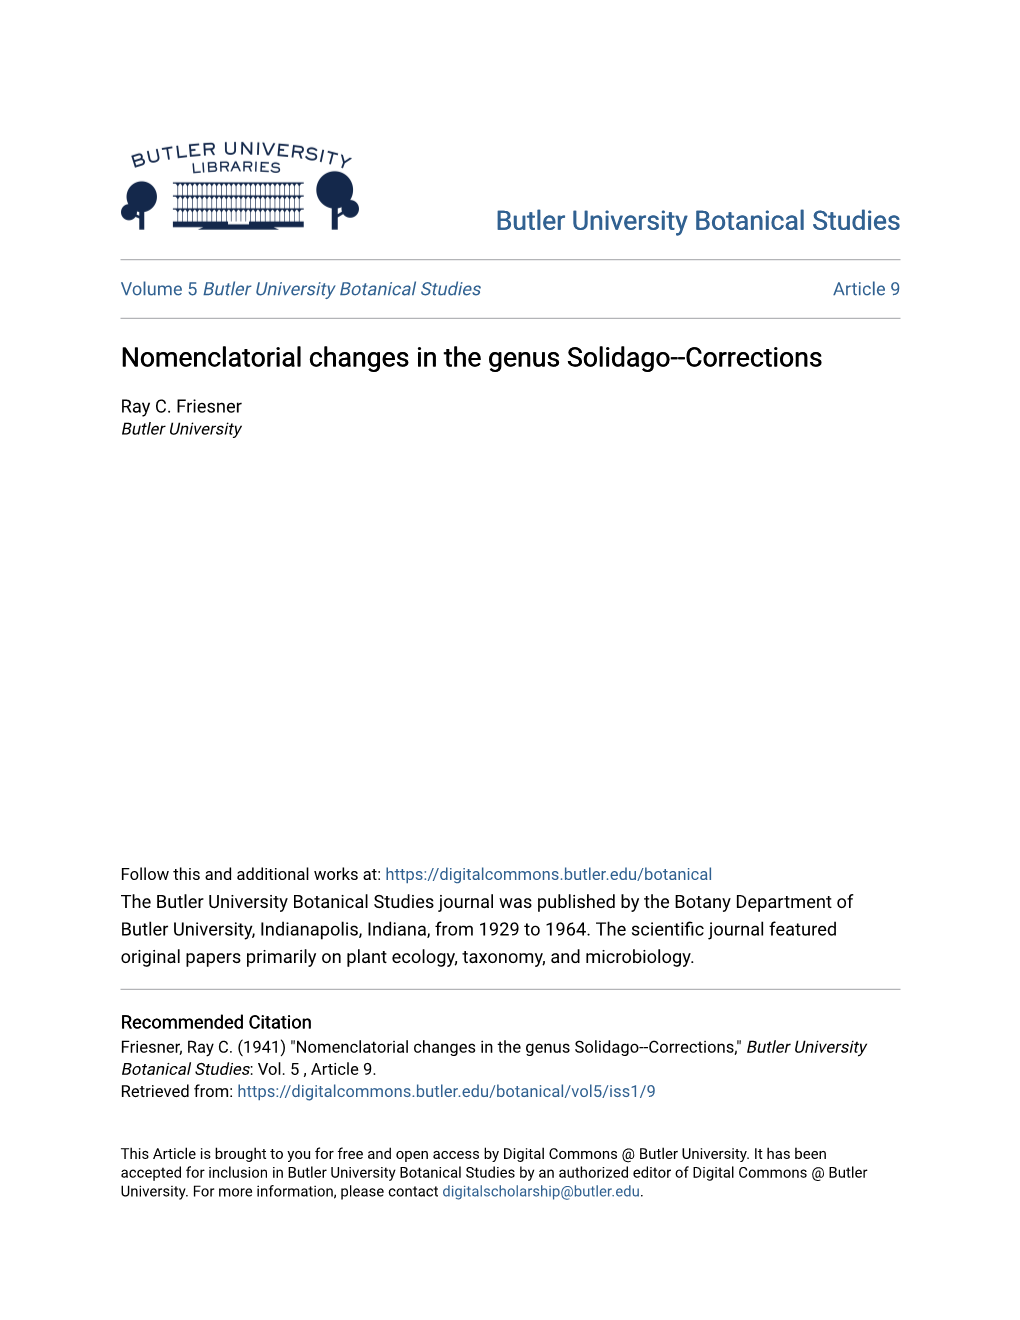 Nomenclatorial Changes in the Genus Solidago--Corrections